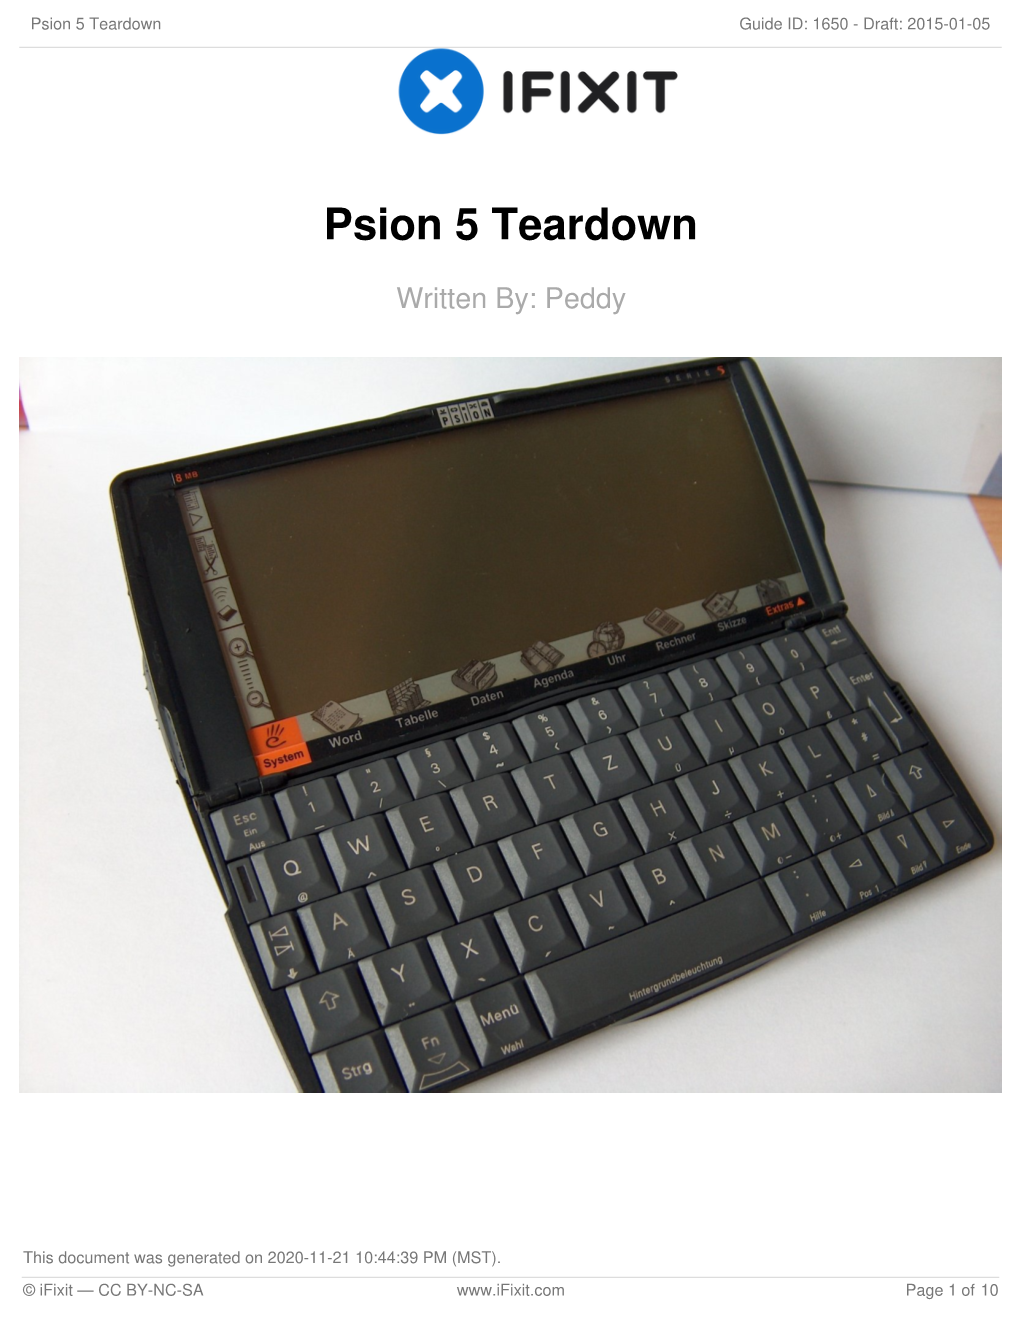 Psion 5 Teardown Guide ID: 1650 - Draft: 2015-01-05